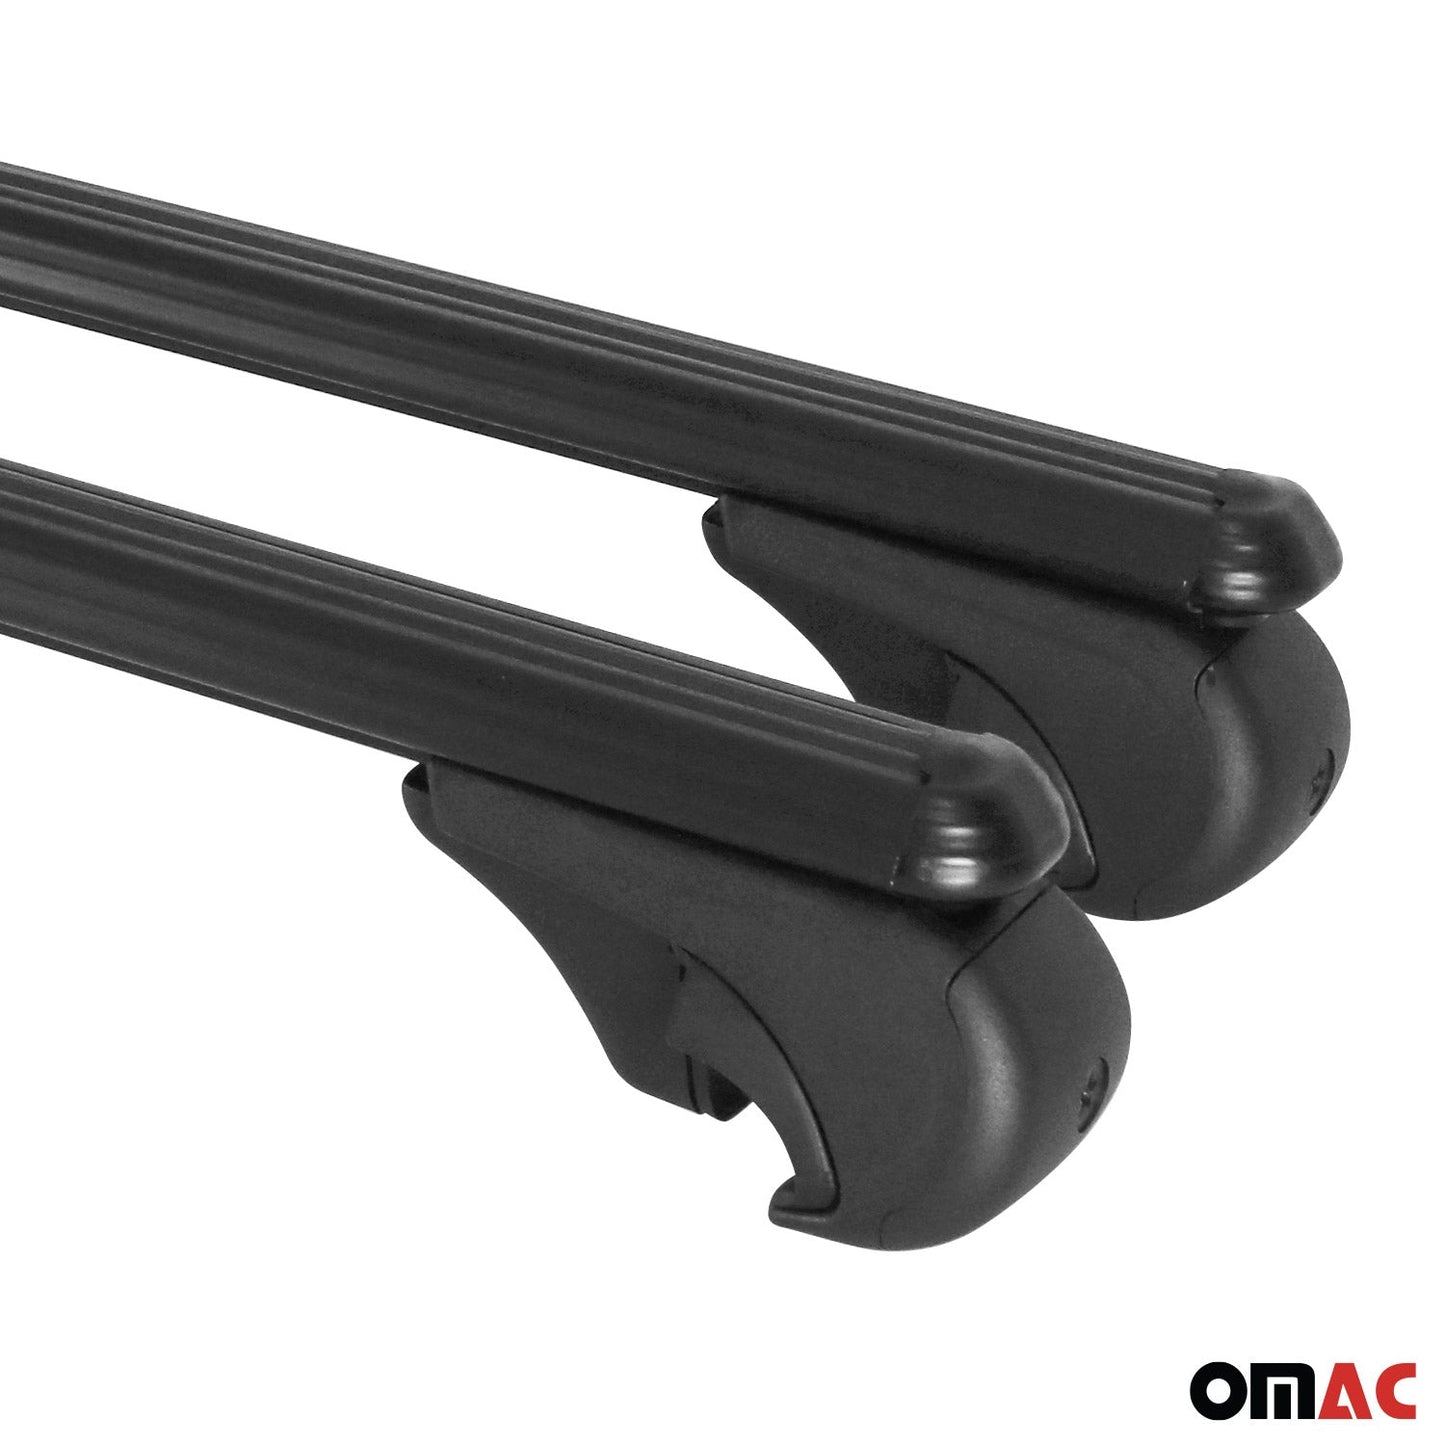 OMAC Bike Rack Carrier Roof Racks Set fits Ford Explorer 2002-2010 Black 3x U020684